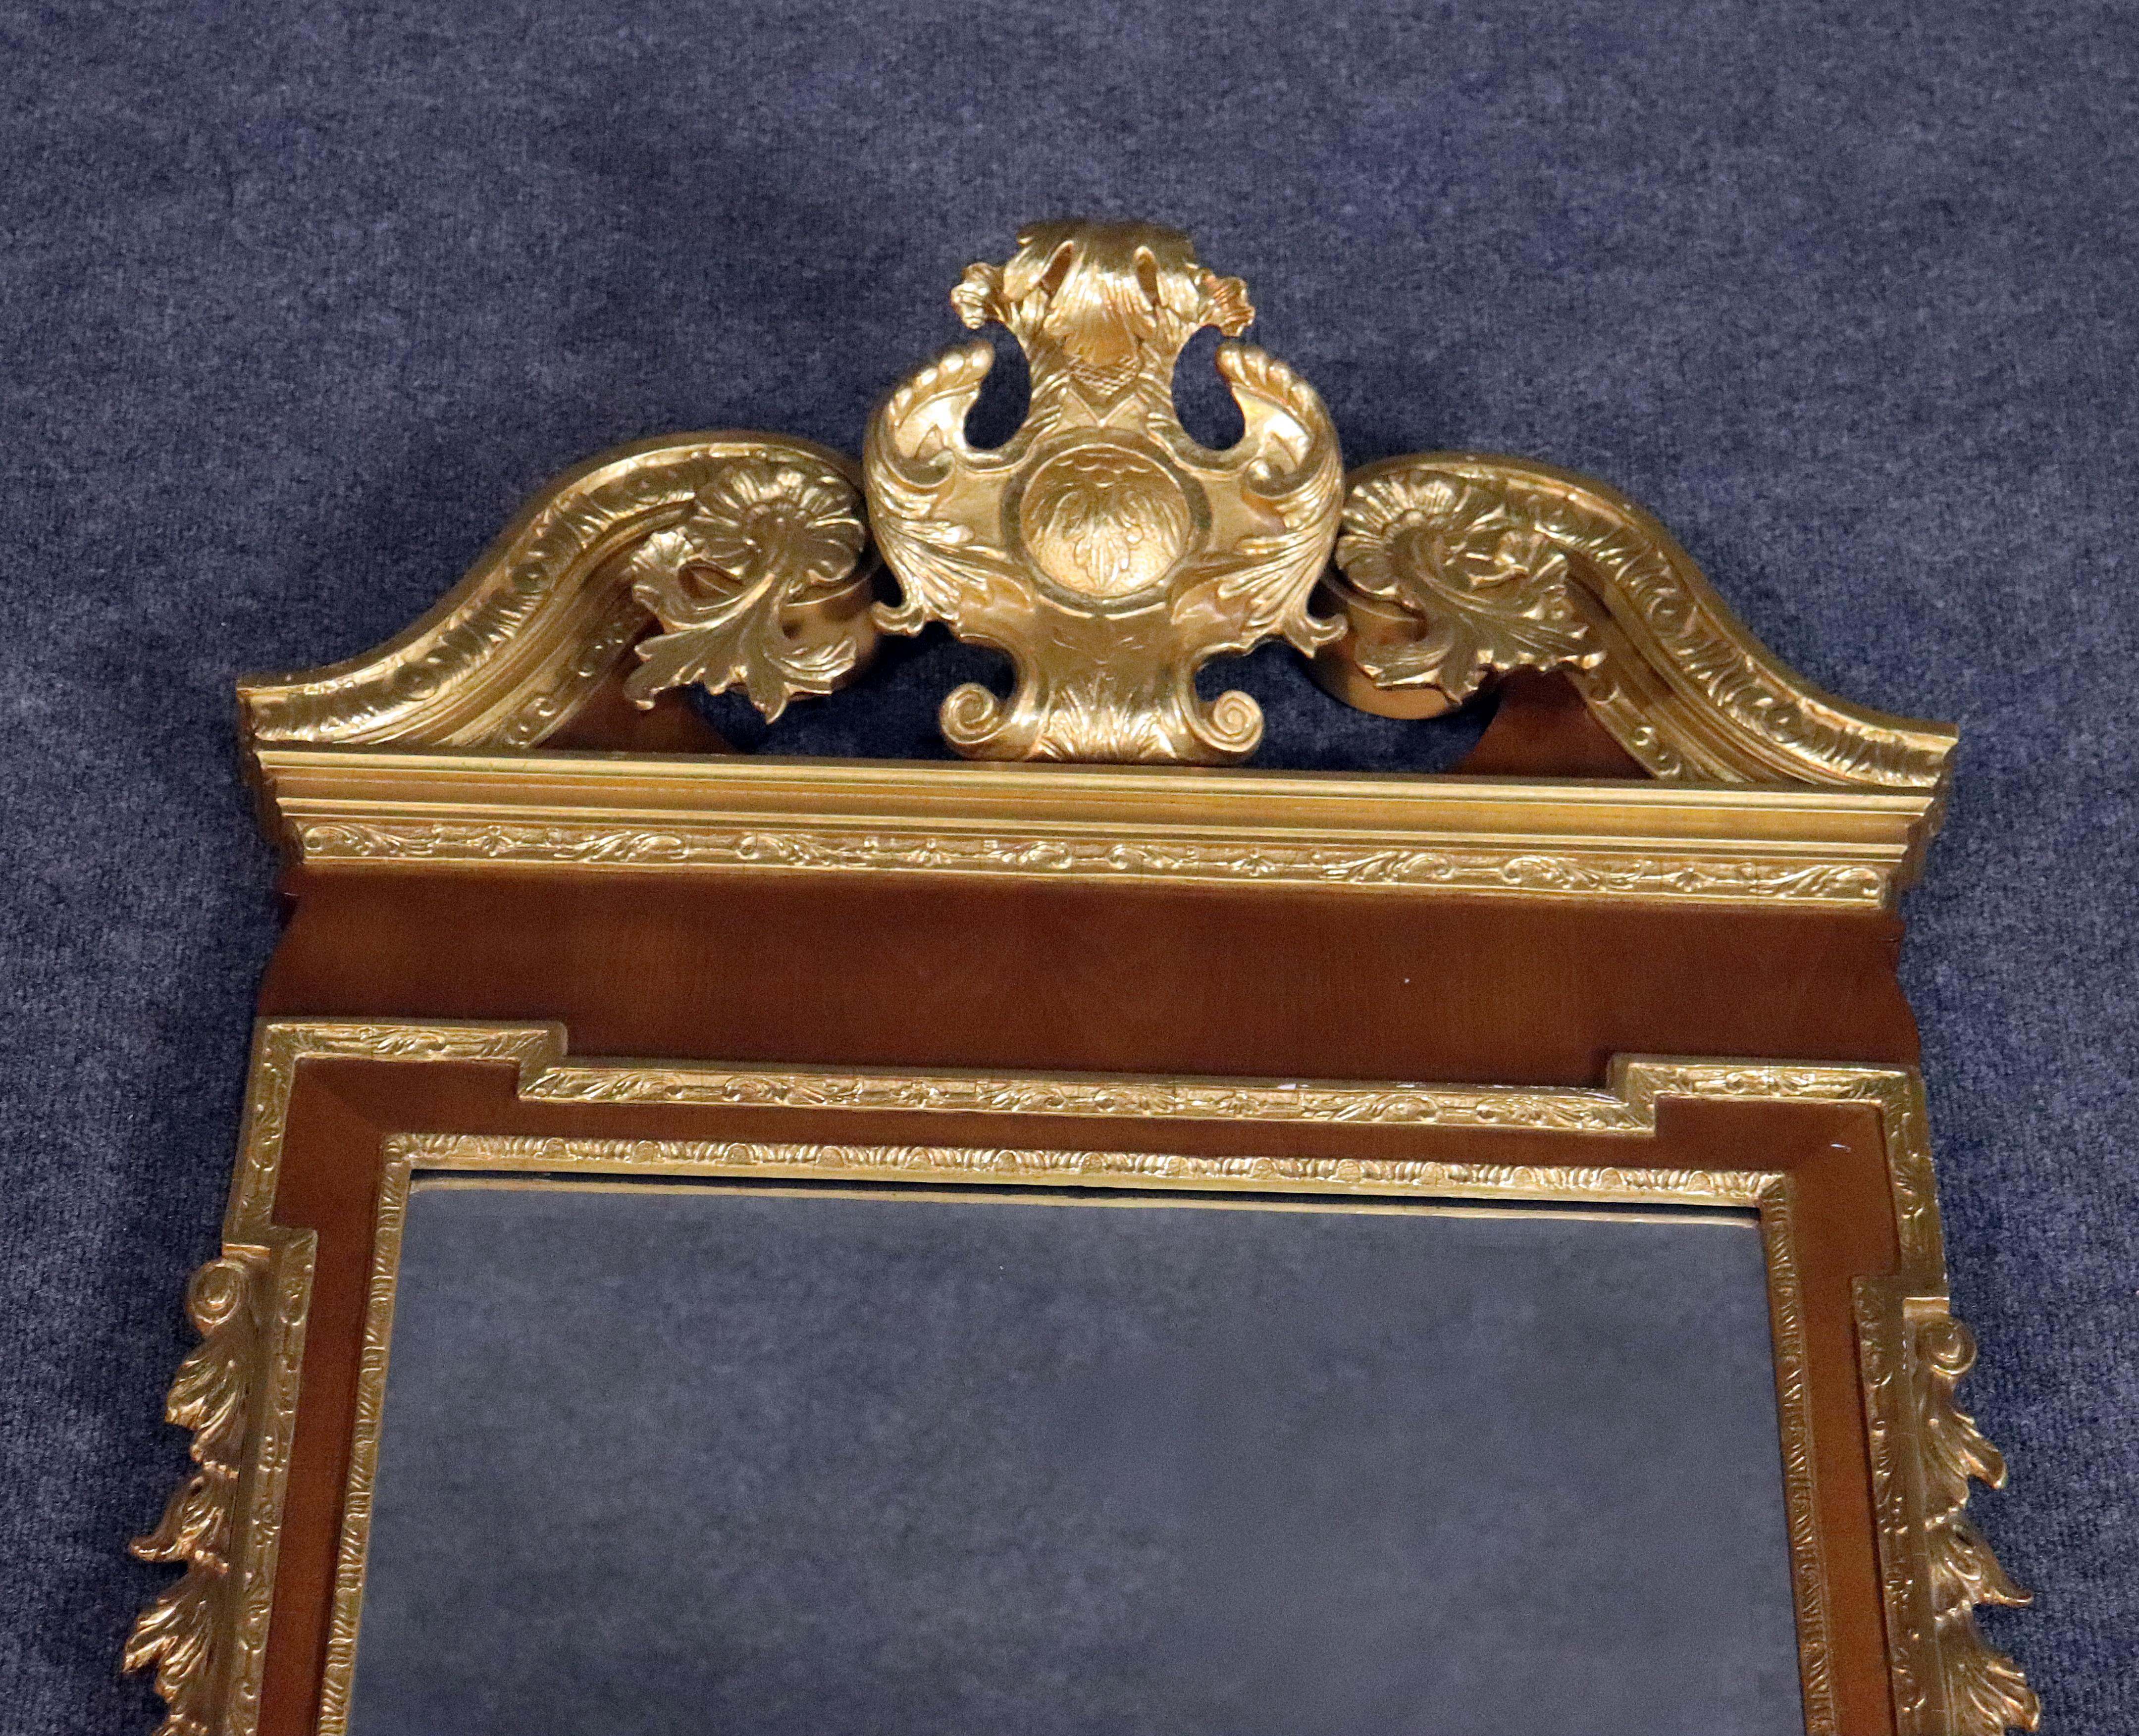 Colonial Williamsburg Friedman Brothers Georgian style gilded walnut frame mirror. CW-LG 15.